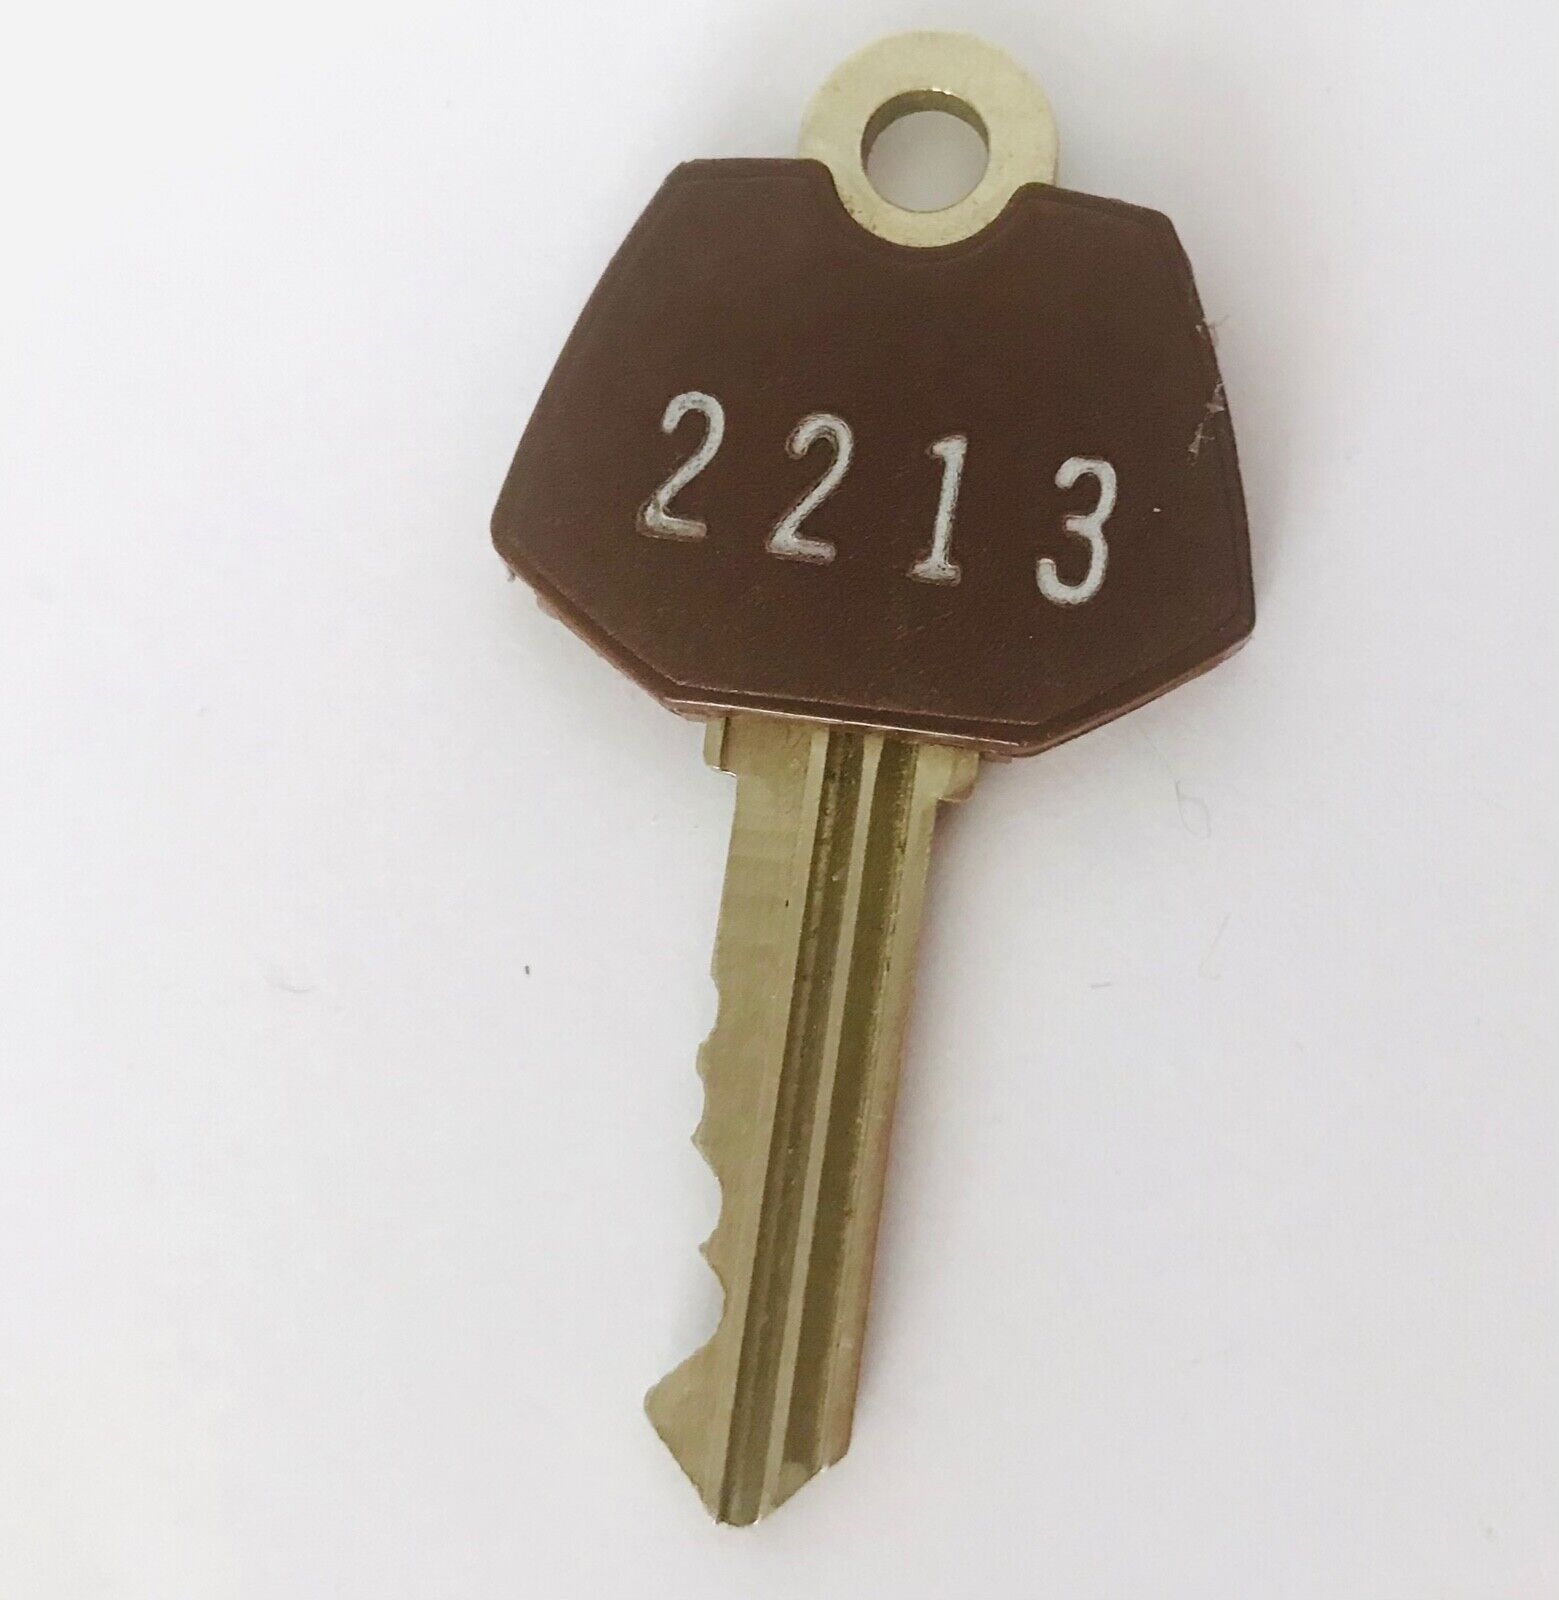 Vintage Hotel Room Key #2213 Motel Inn Lodging Brown Plastic Cover No Location